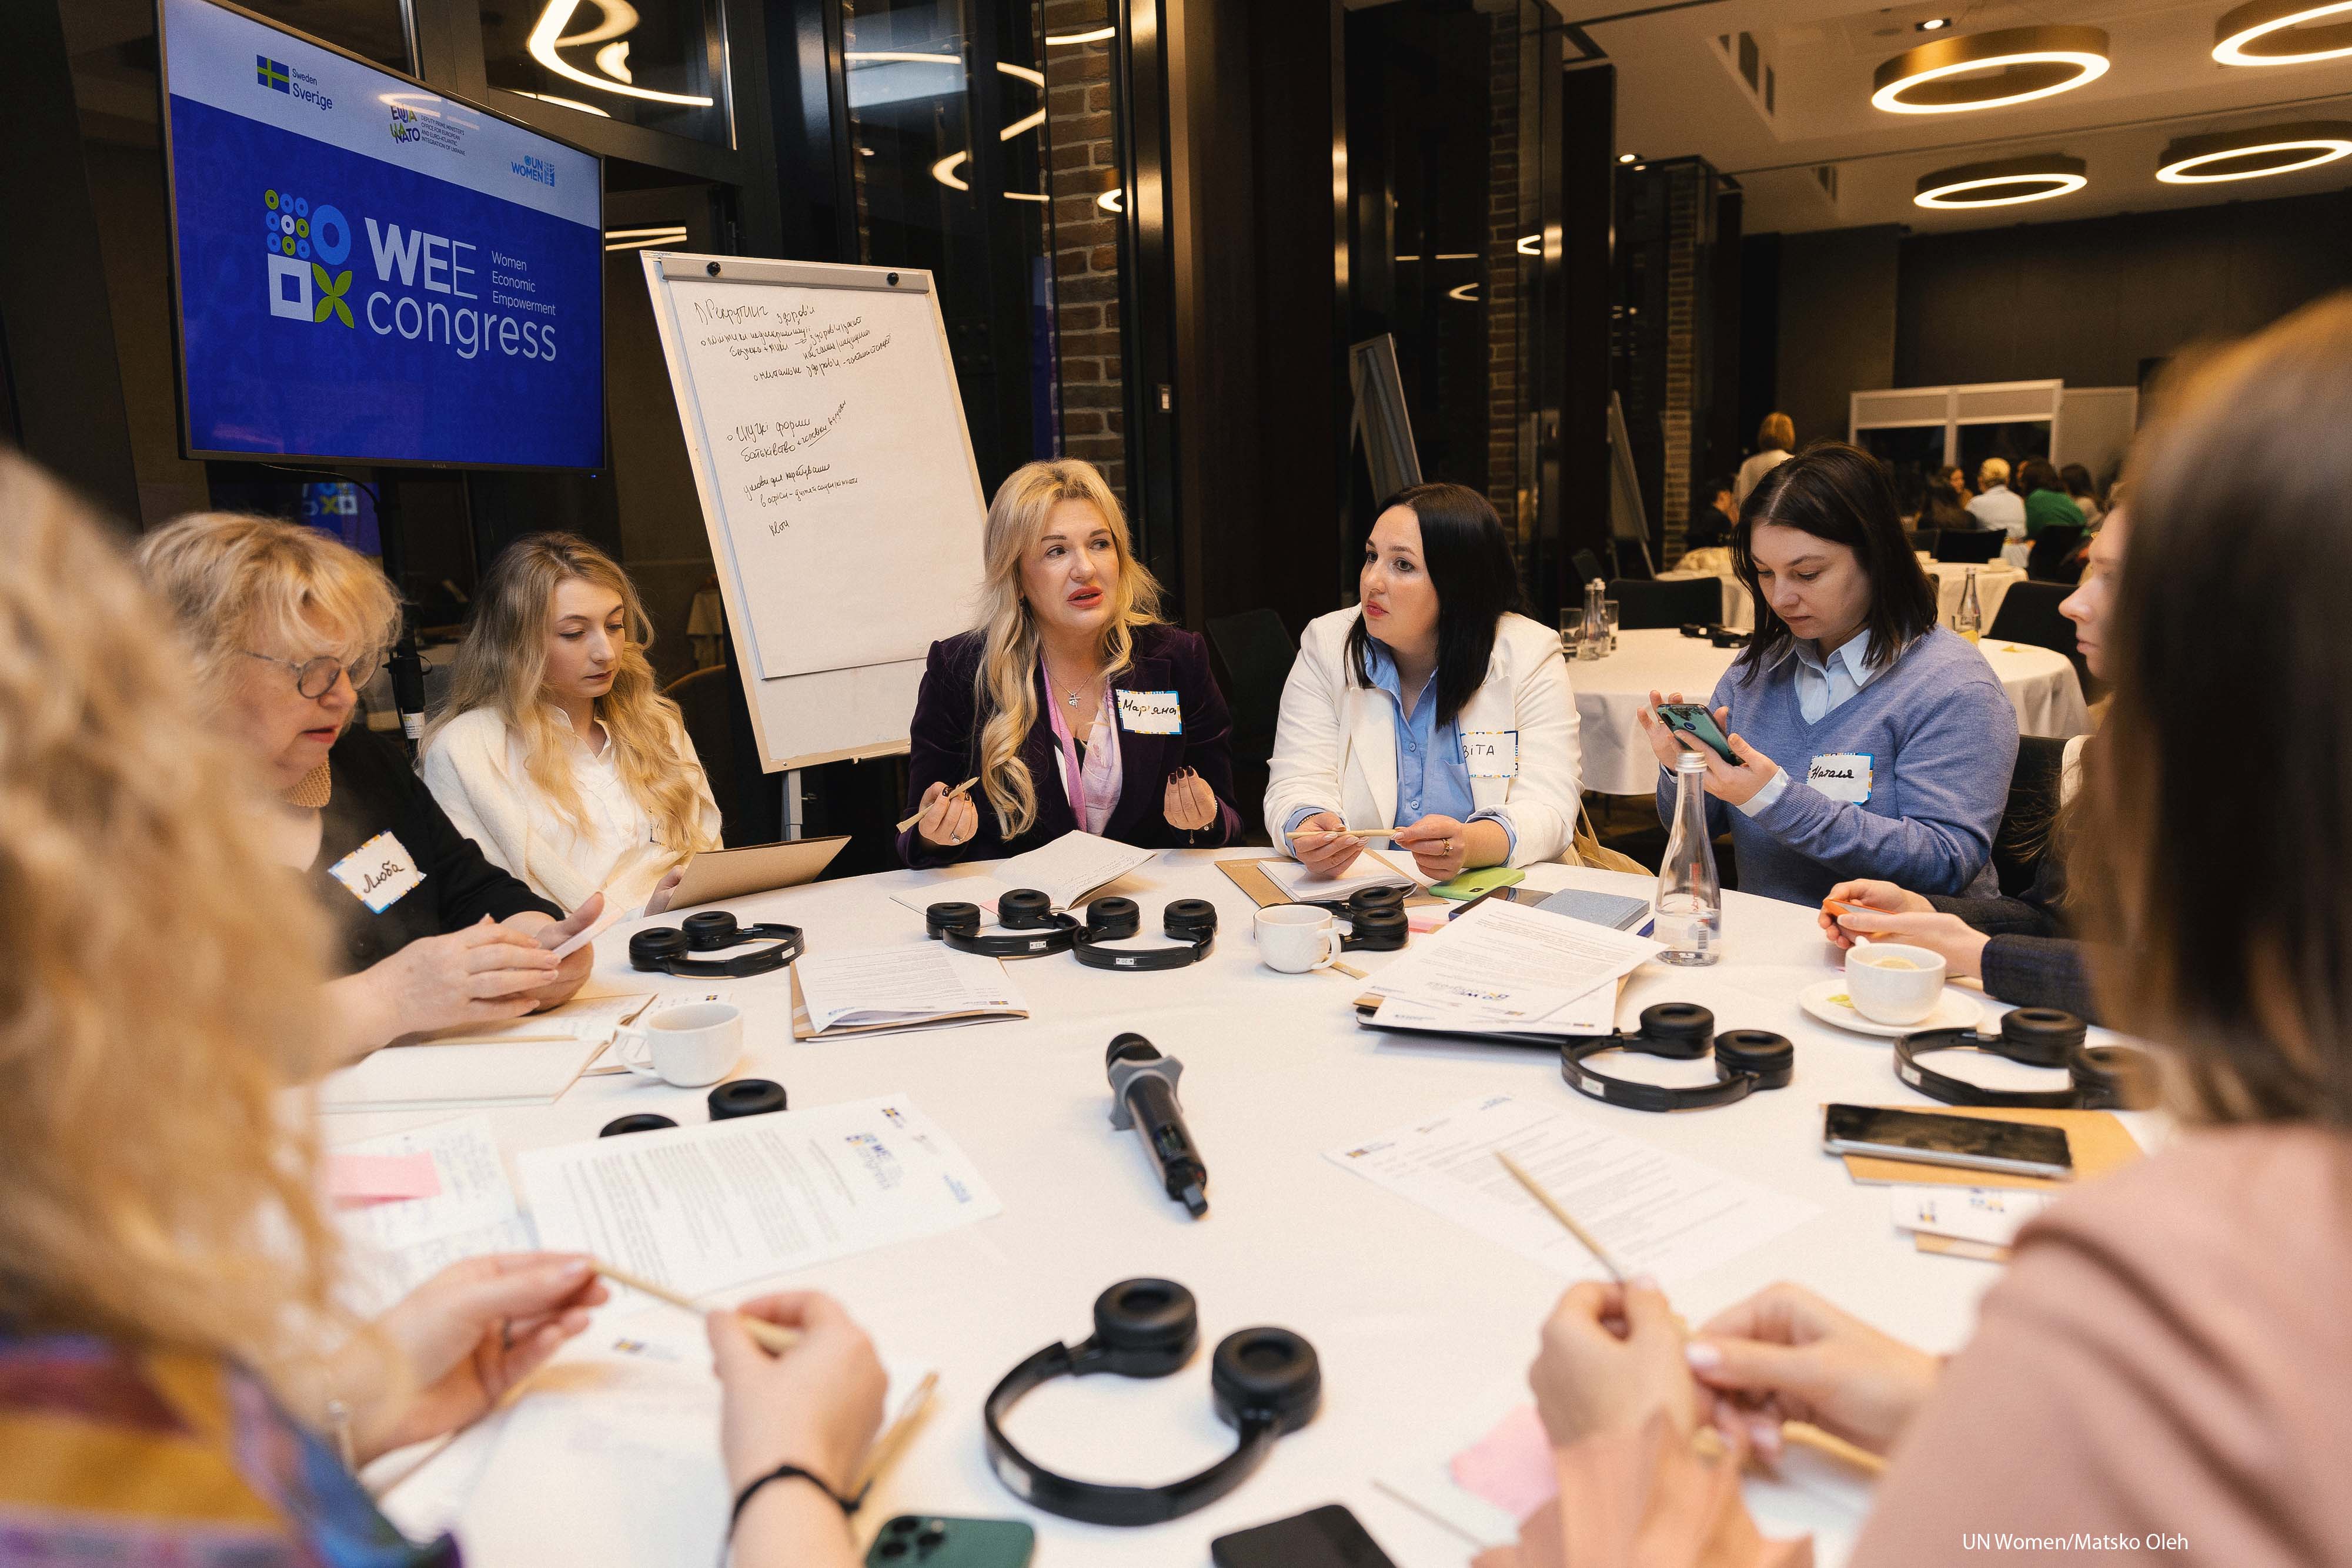 Participants brainstorming recommendations for businesses to support women at the Women’s Economic Empowerment Congress in Lviv, Ukraine in November 2022. Photo: UN Women/Matsko Oleh.